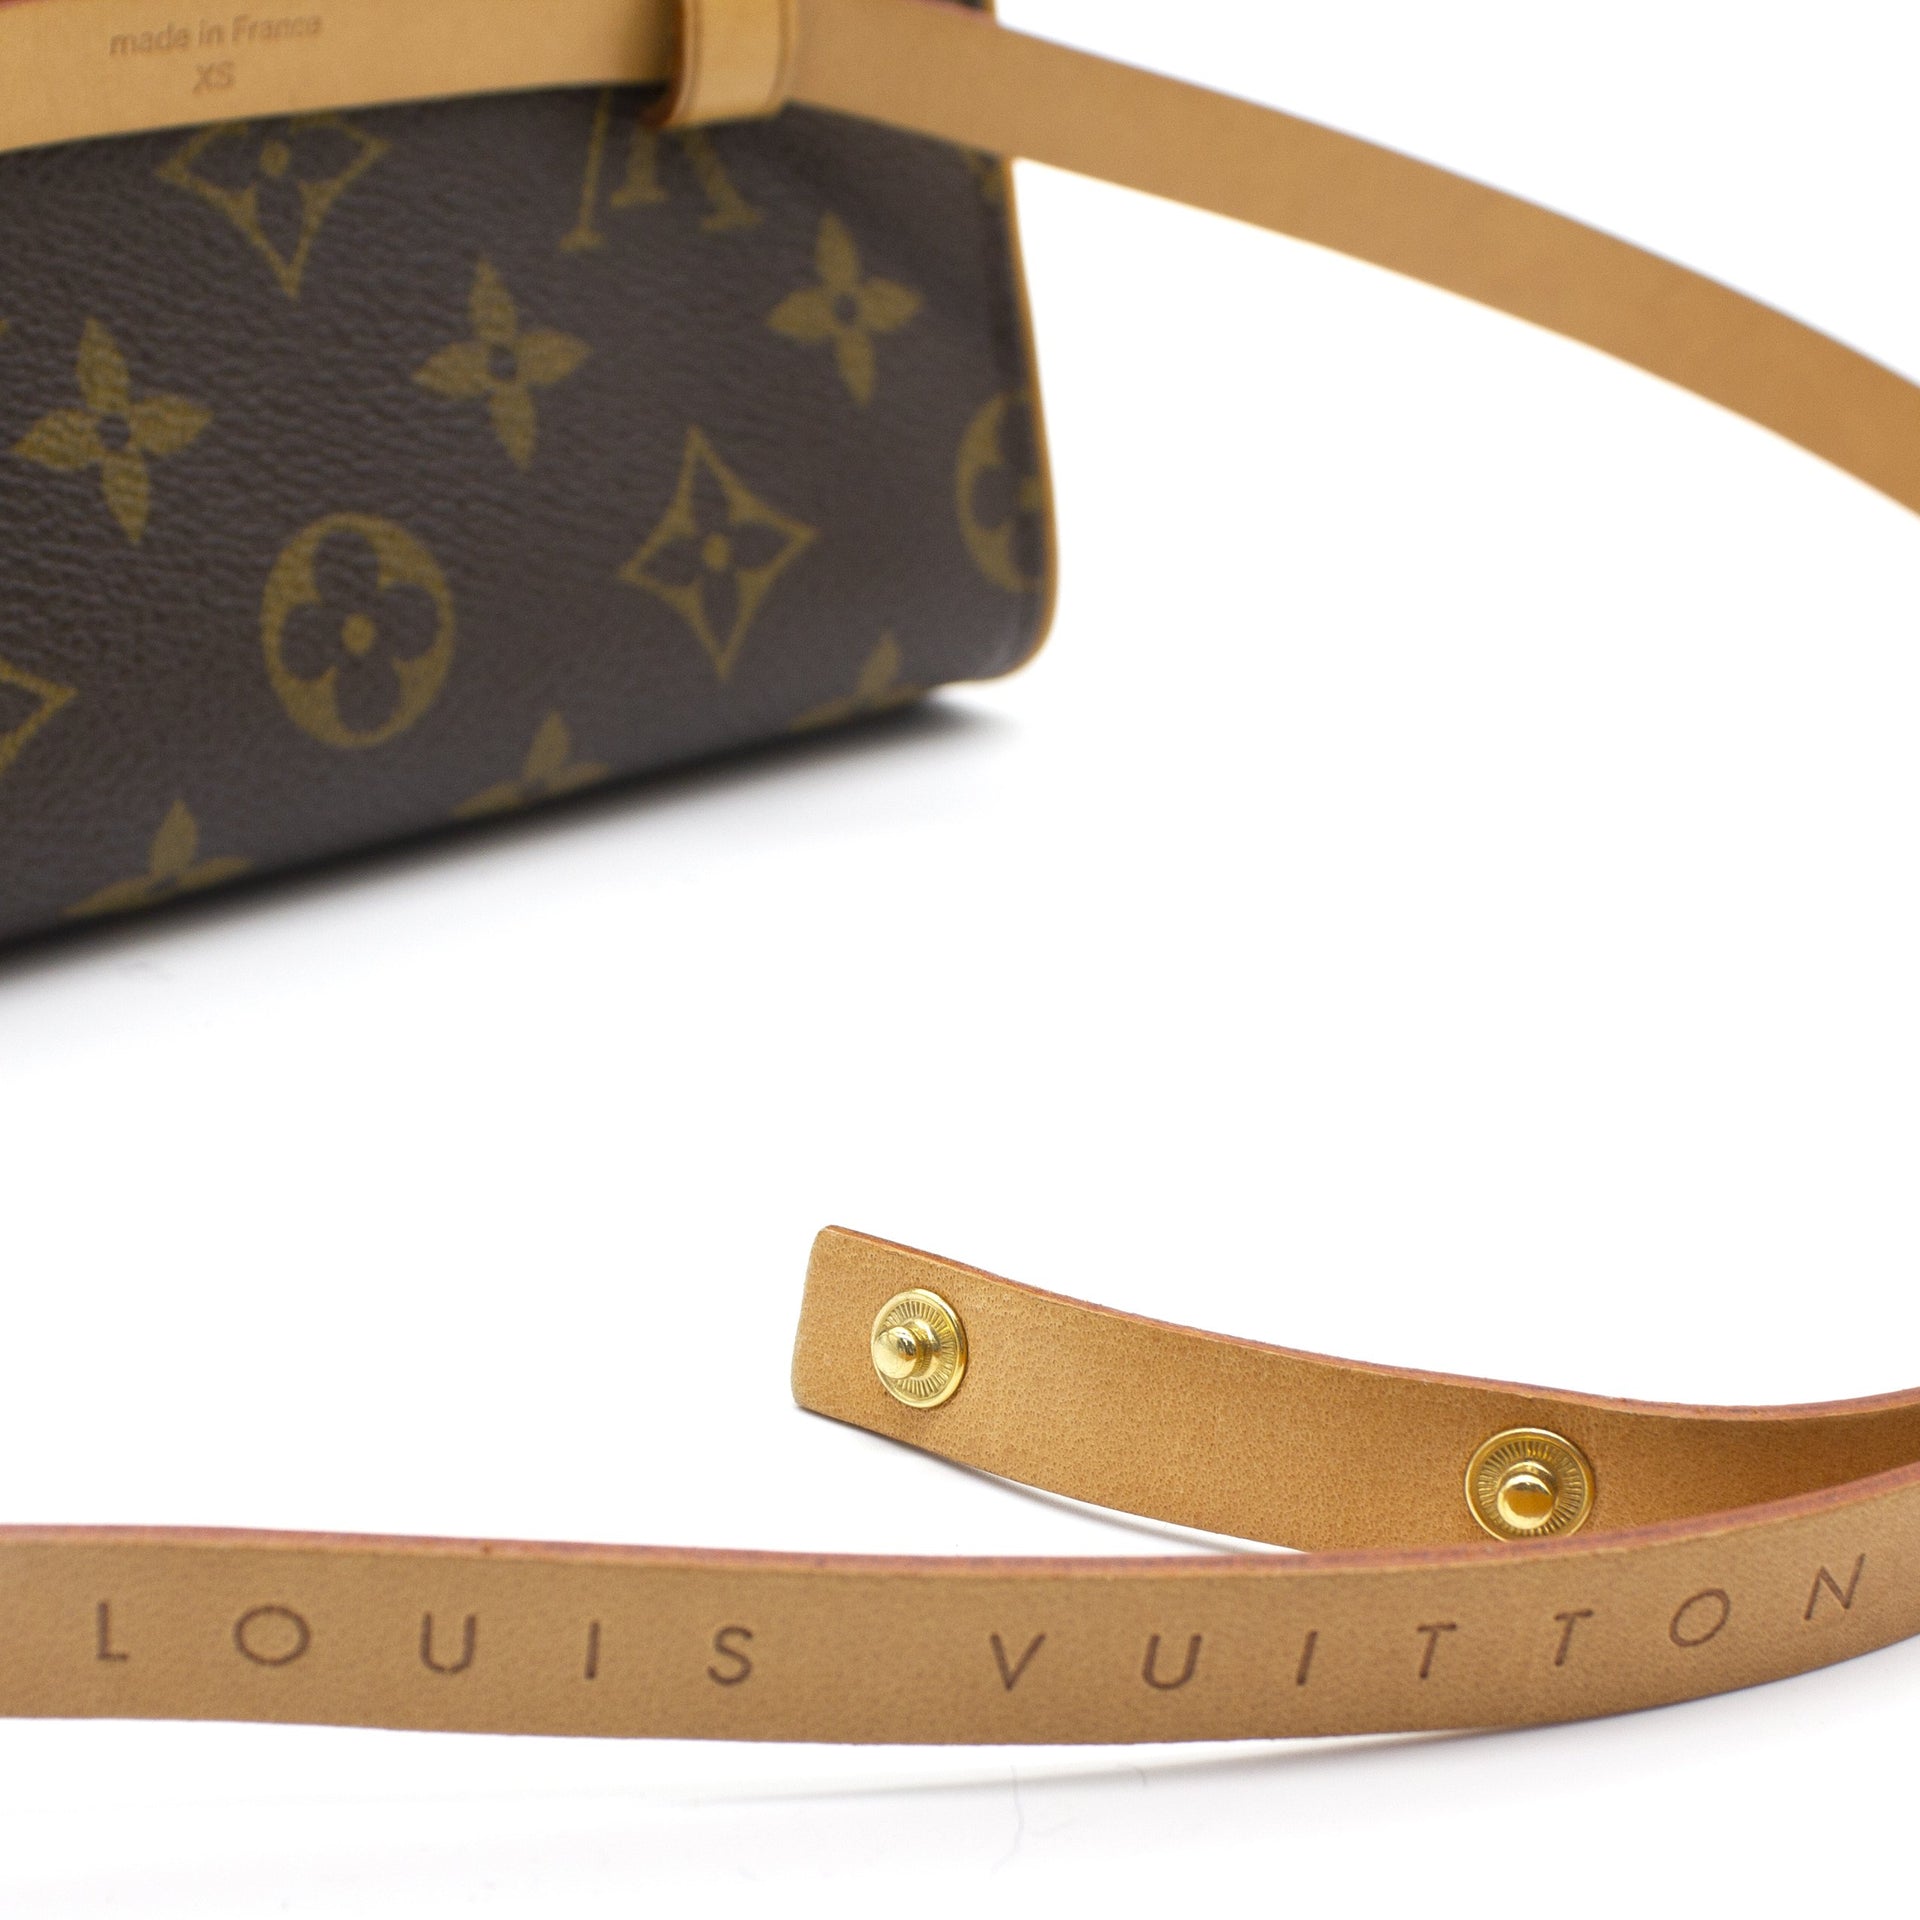 Louis Vuitton Shoulder Strap in Monogram - SOLD